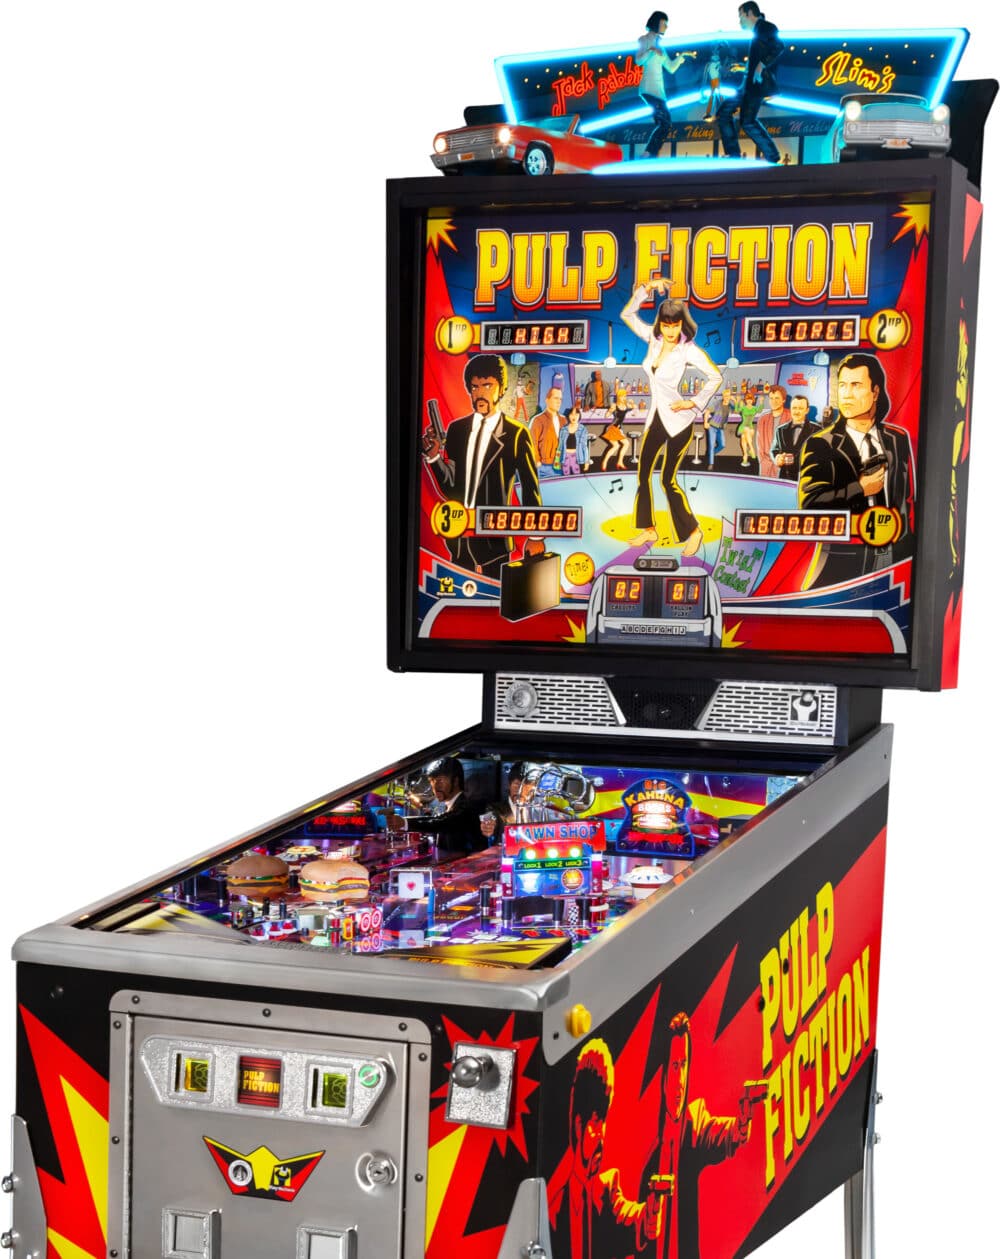 Pulp Fiction Limited Edition Pinball Machine